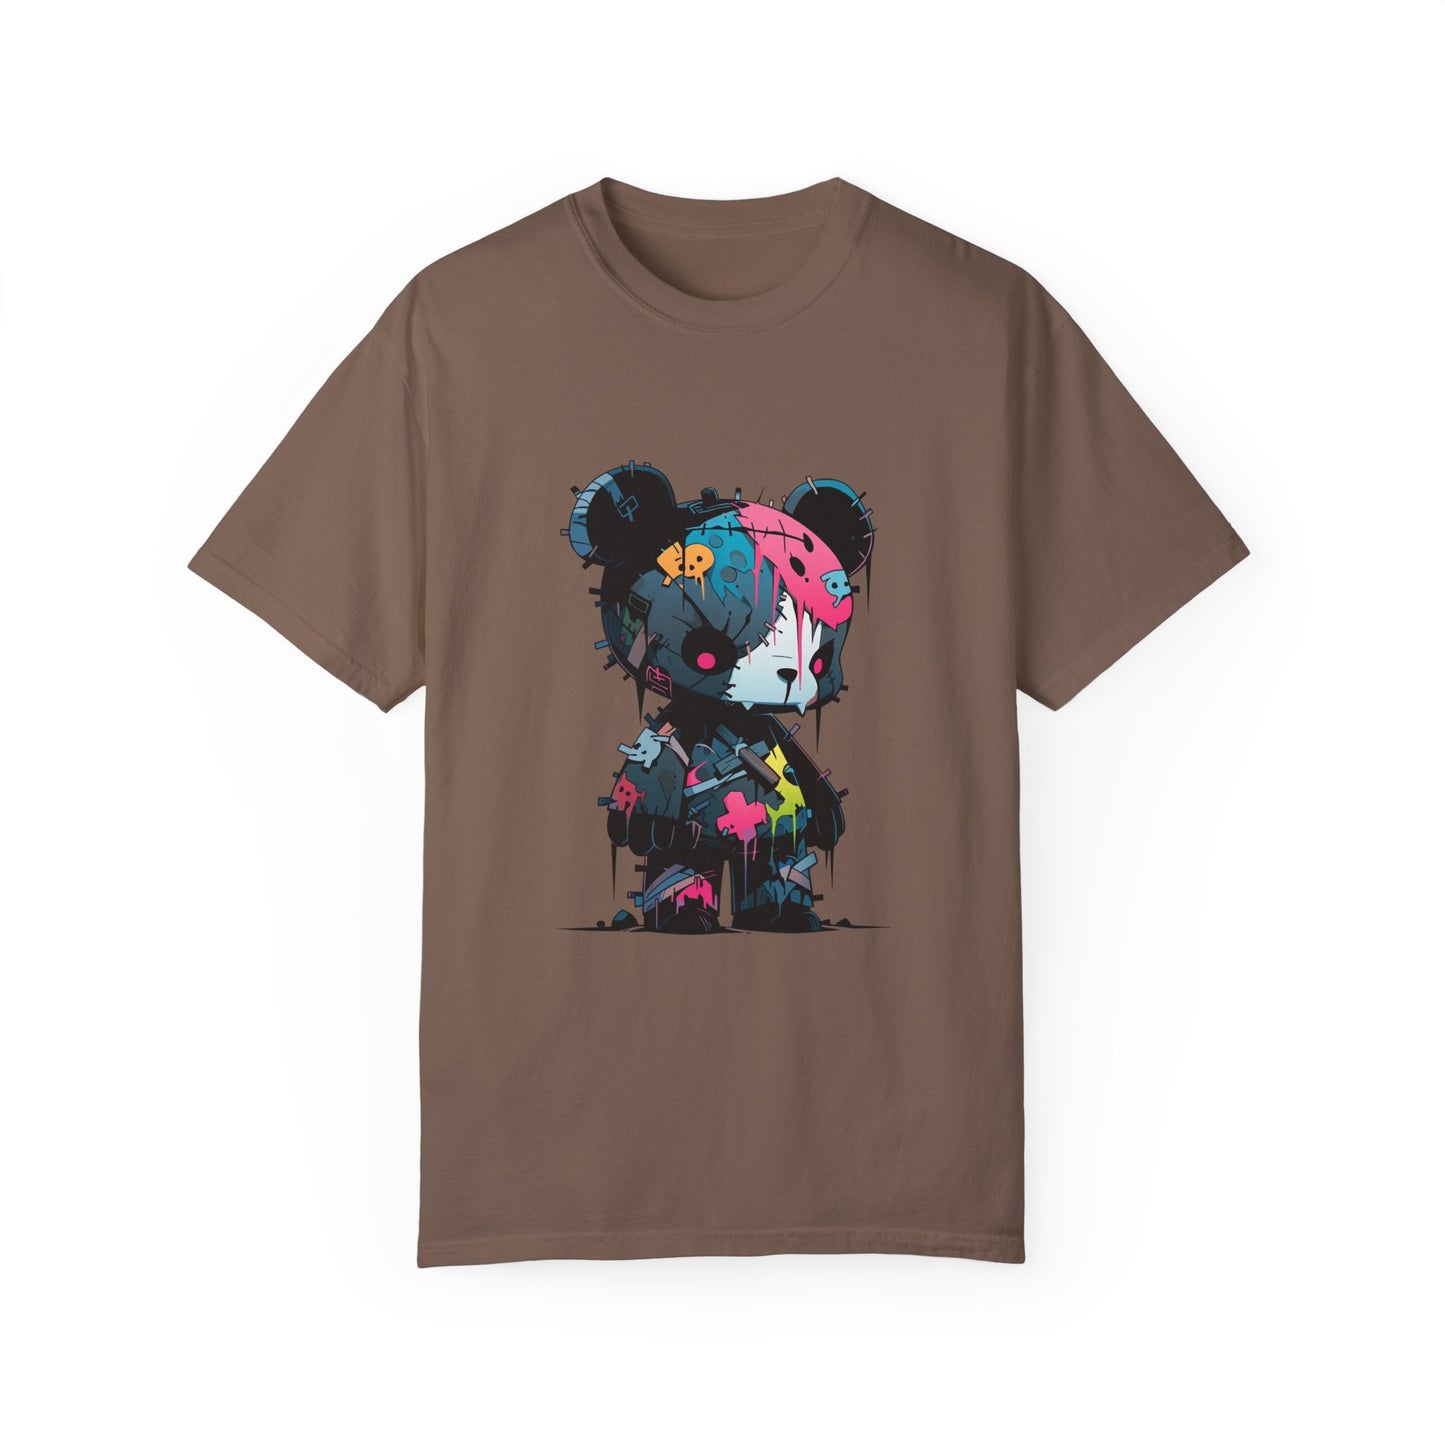 Hip Hop Teddy Bear Graphic Unisex Garment-dyed T-shirt Cotton Funny Humorous Graphic Soft Premium Unisex Men Women Espresso T-shirt Birthday Gift-15